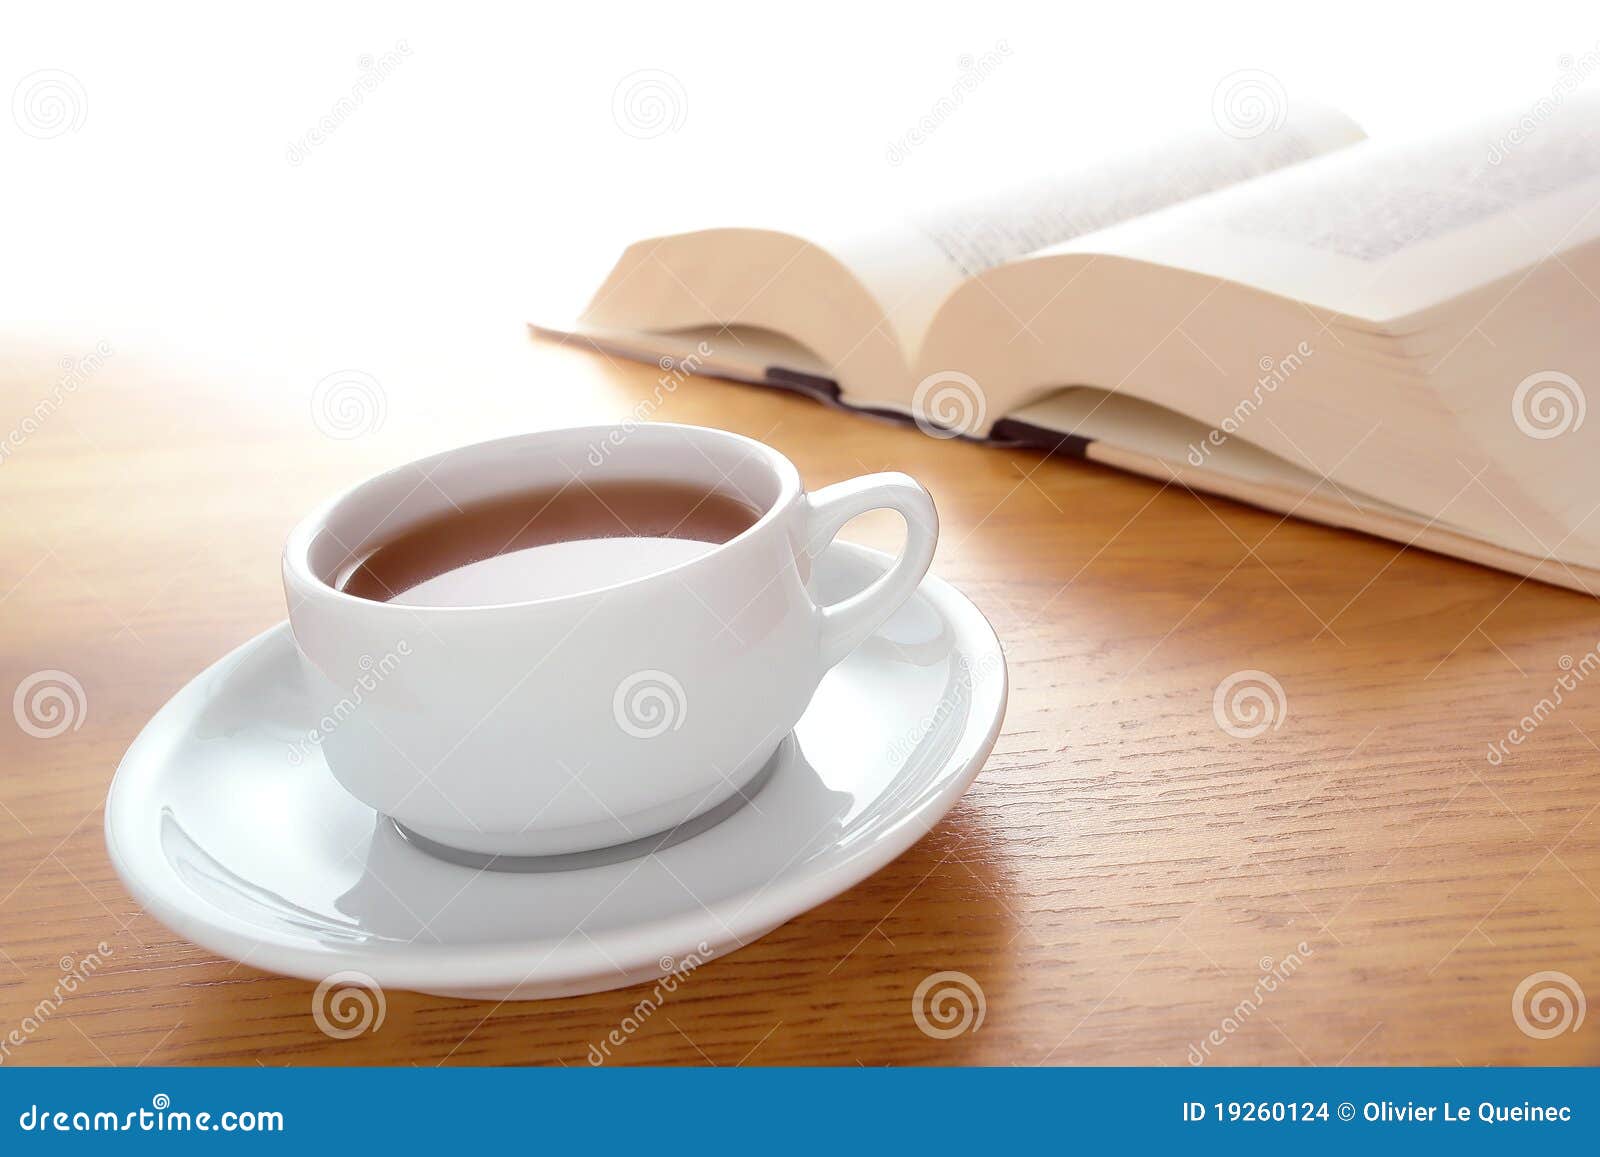 https://thumbs.dreamstime.com/z/cup-coffee-big-book-leisure-wood-table-19260124.jpg